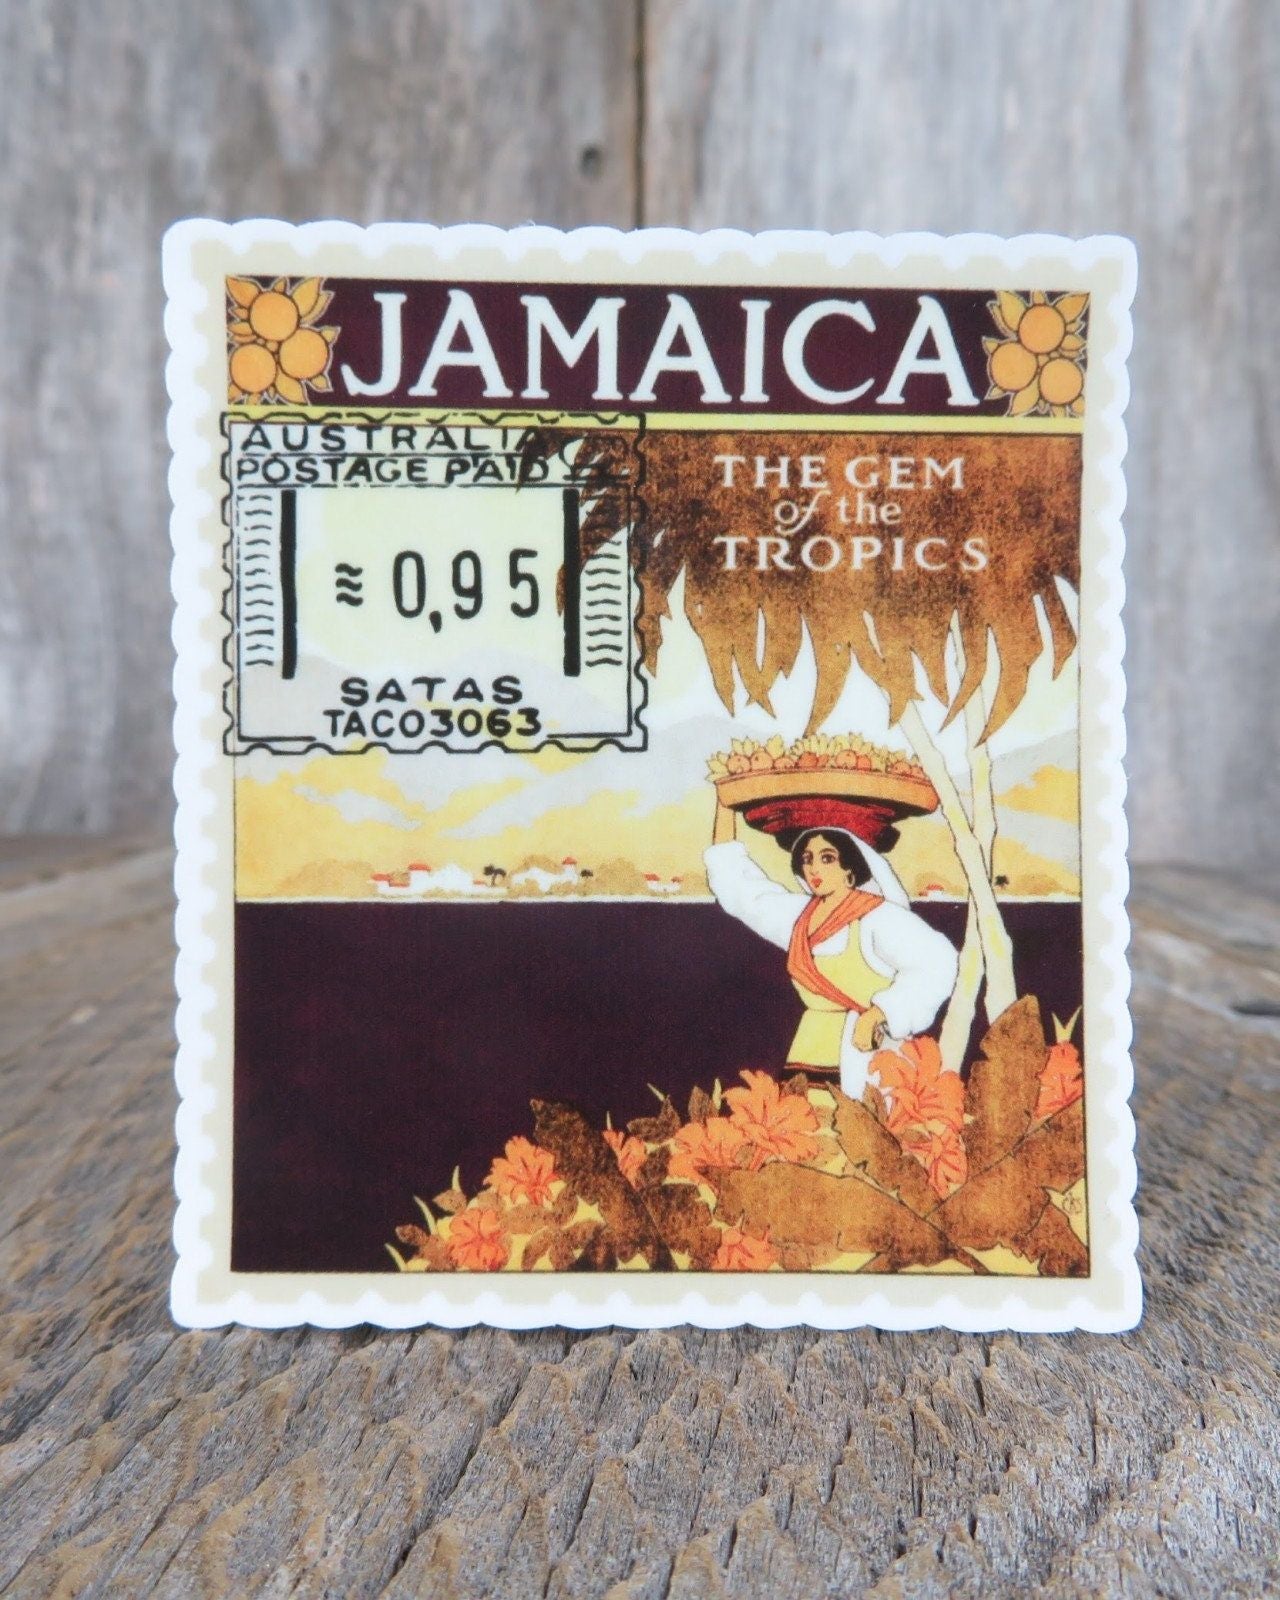 Jamaica Postal Stamp Sticker Gem of the Tropics Waterproof Travel Souvenir Water Bottle Laptop